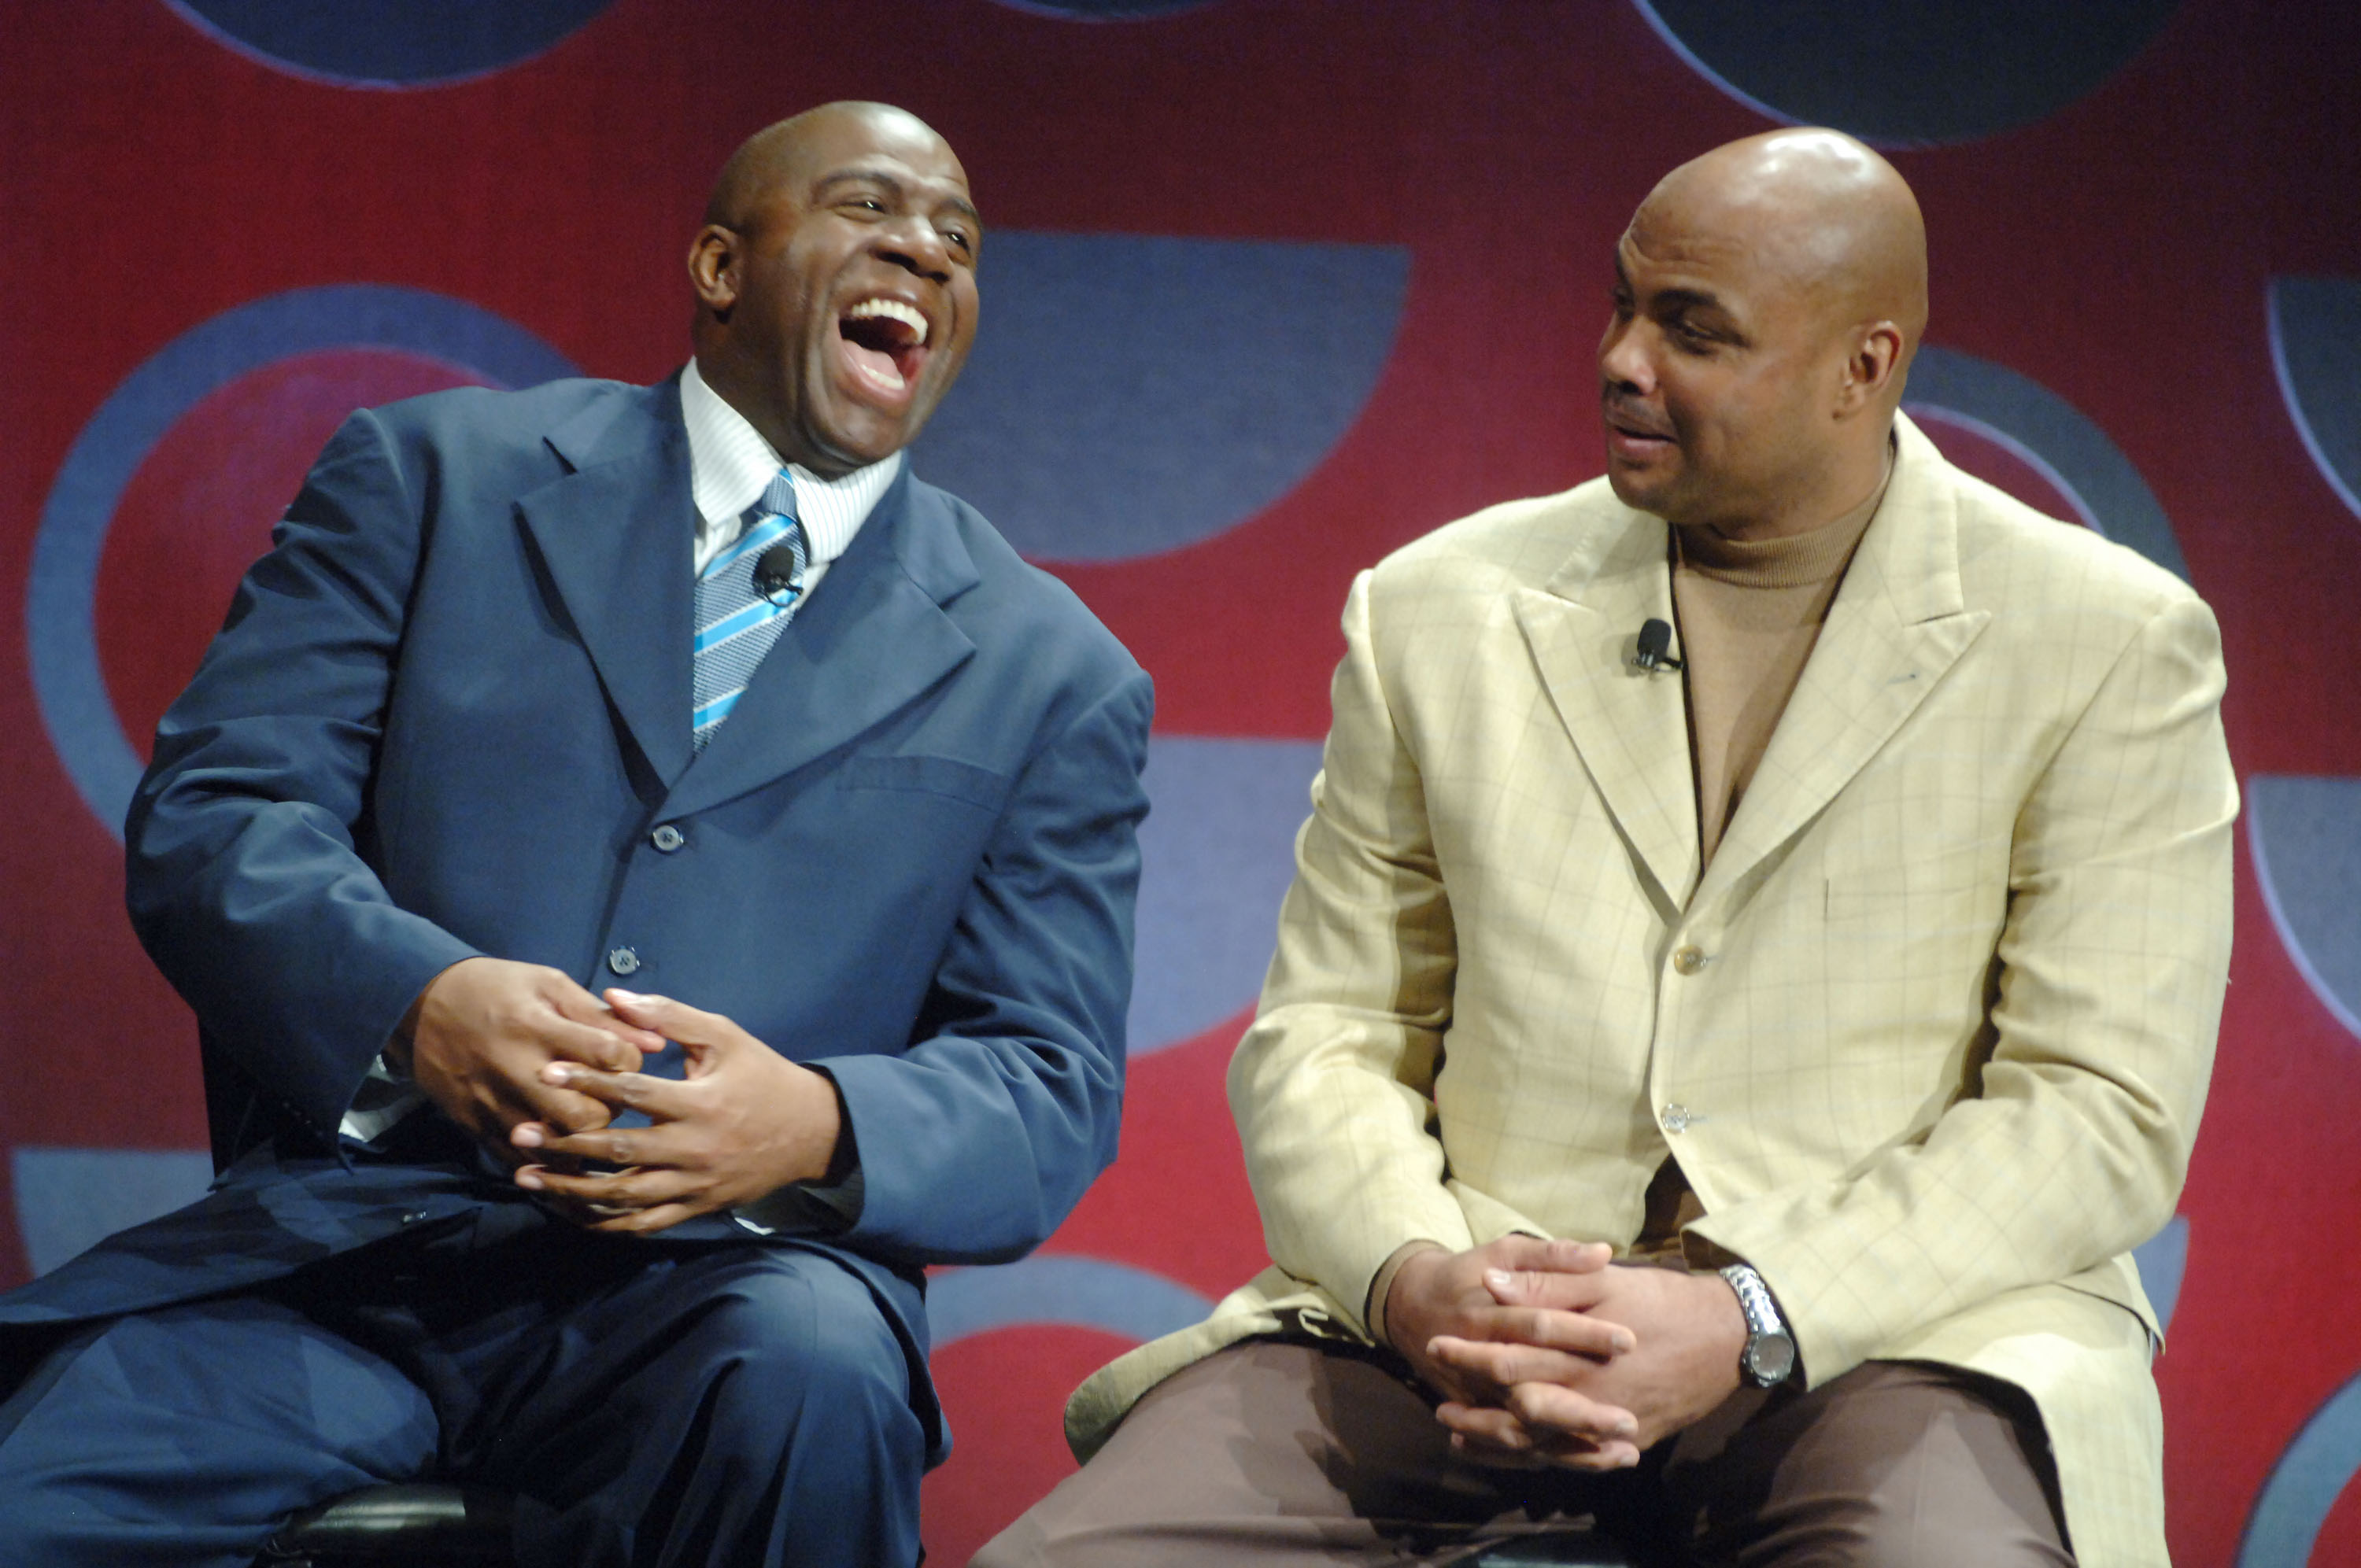 Charles Barkley and Magic Johnson on the set of TNT "Upfront"